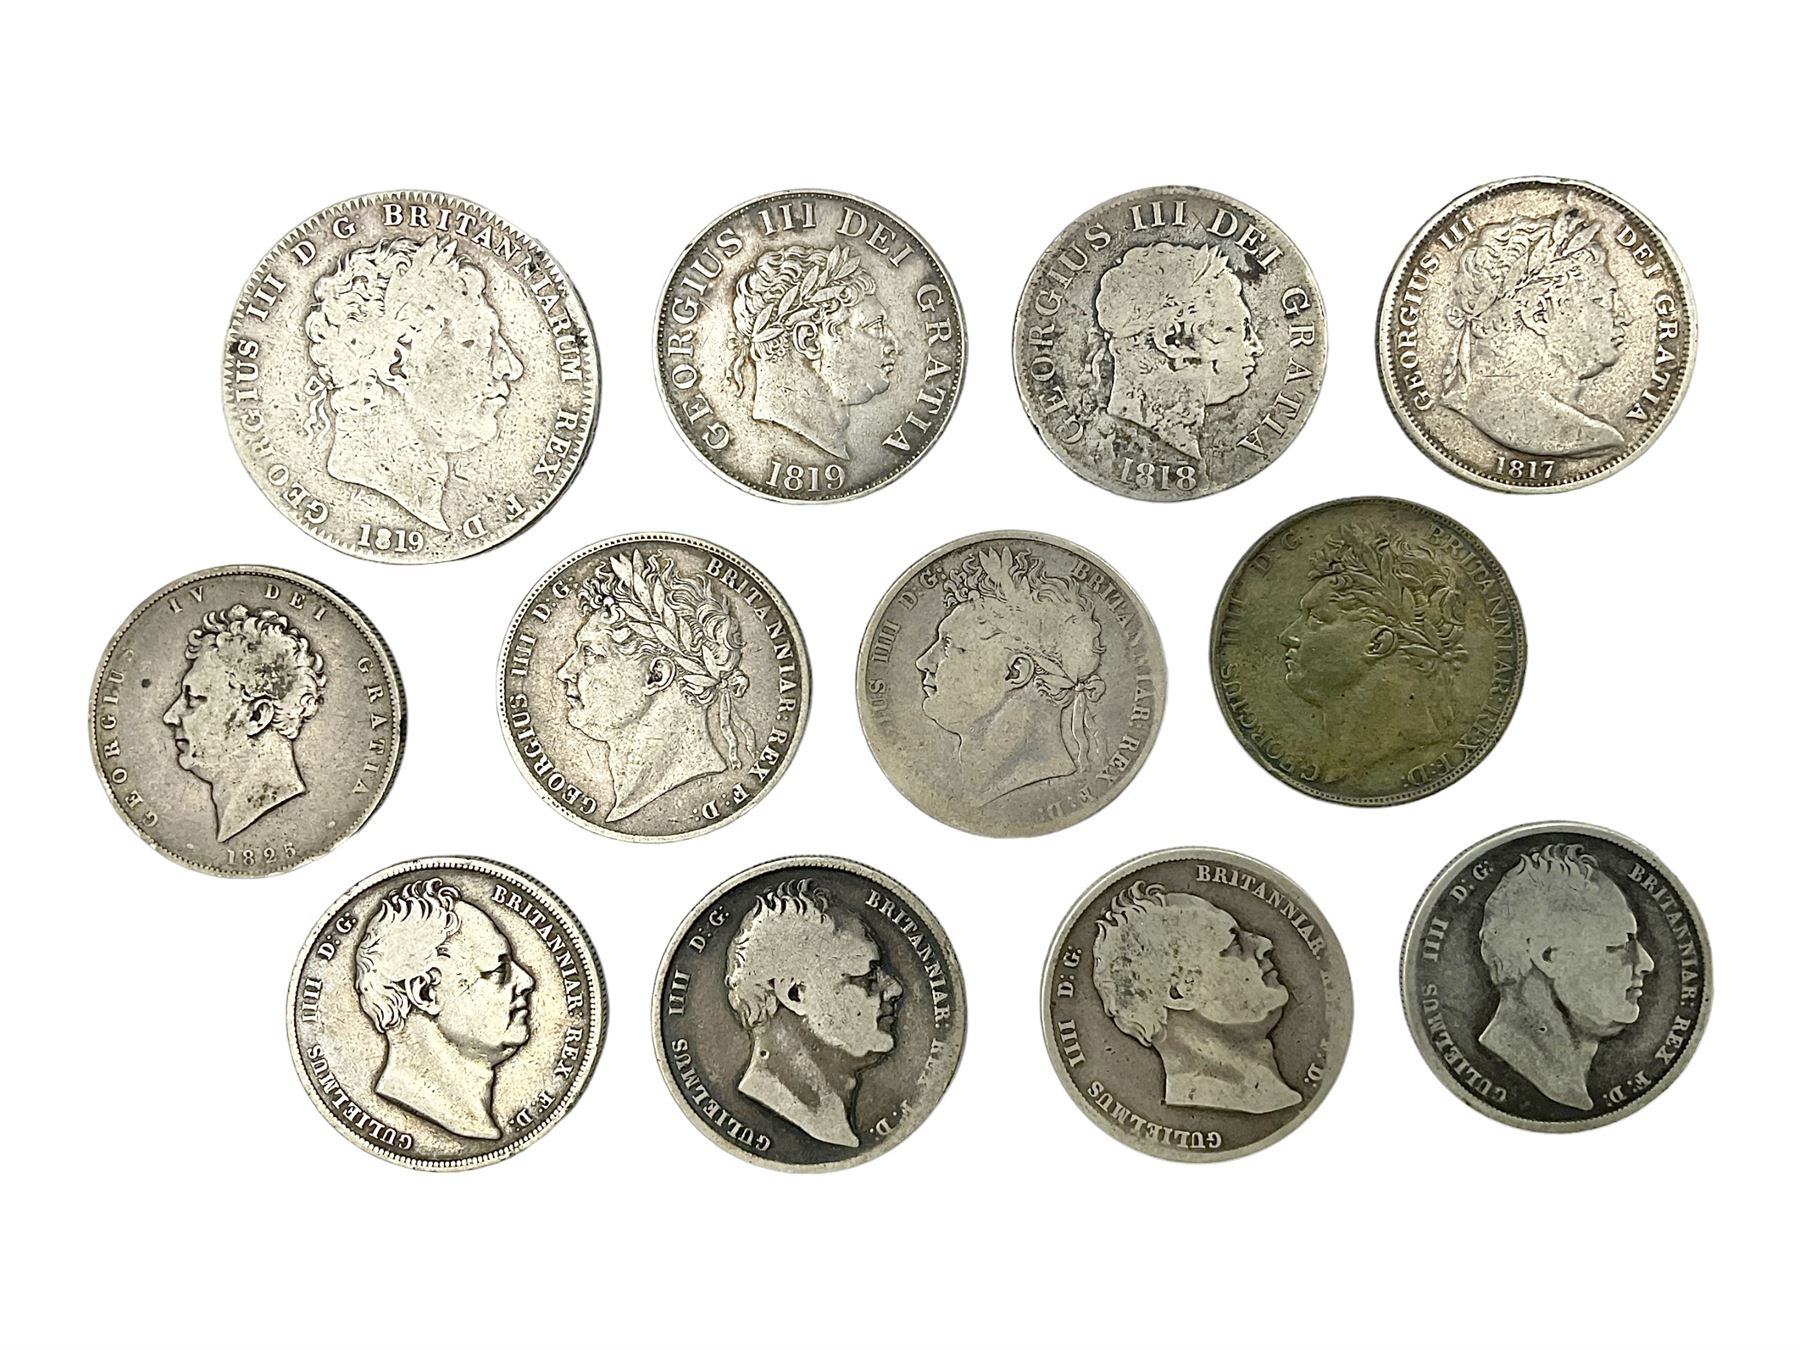 King George III 1819 silver crown coin with twelve half crowns of George III